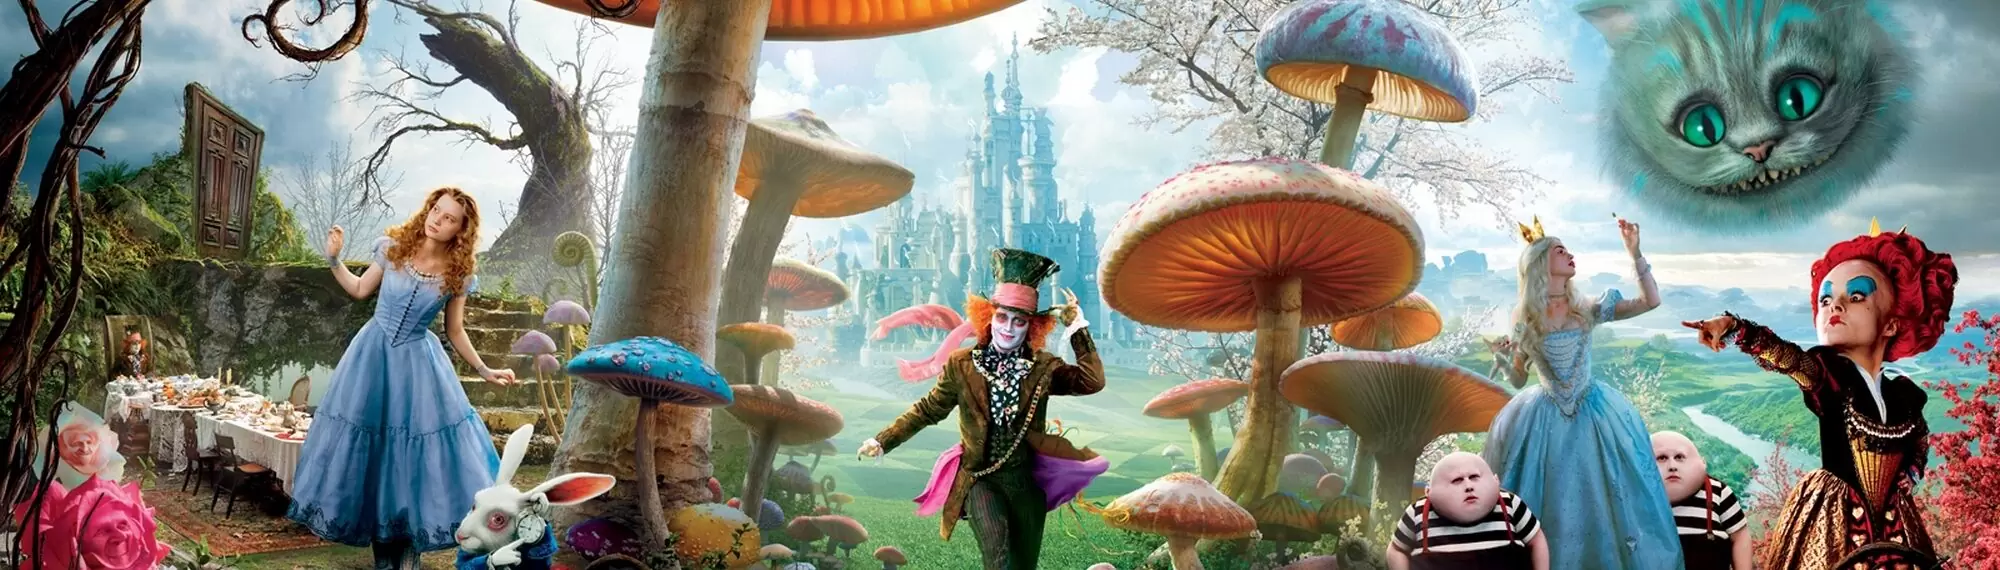 دانلود فیلم Alice in Wonderland